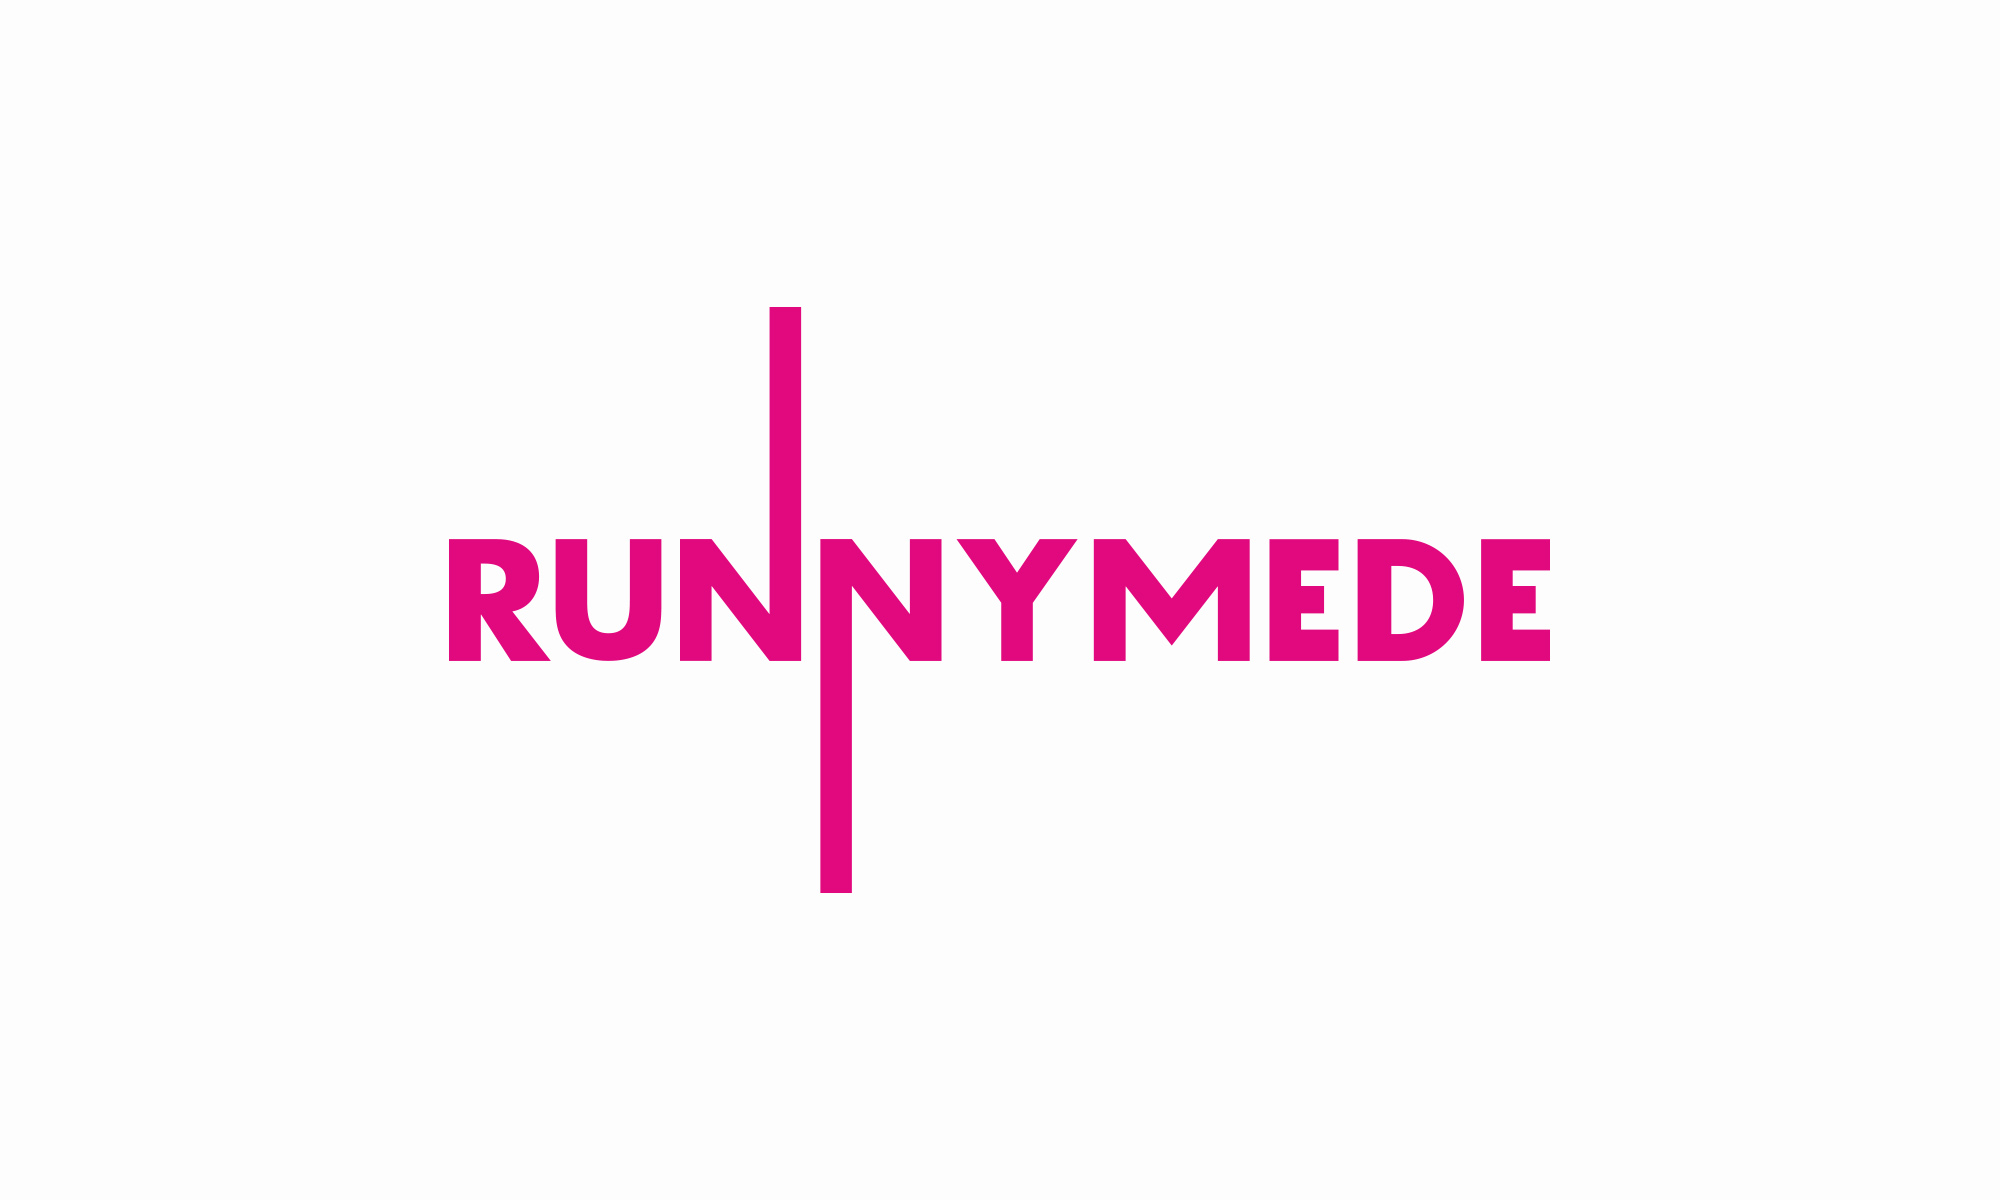 Runnymede logo identity design